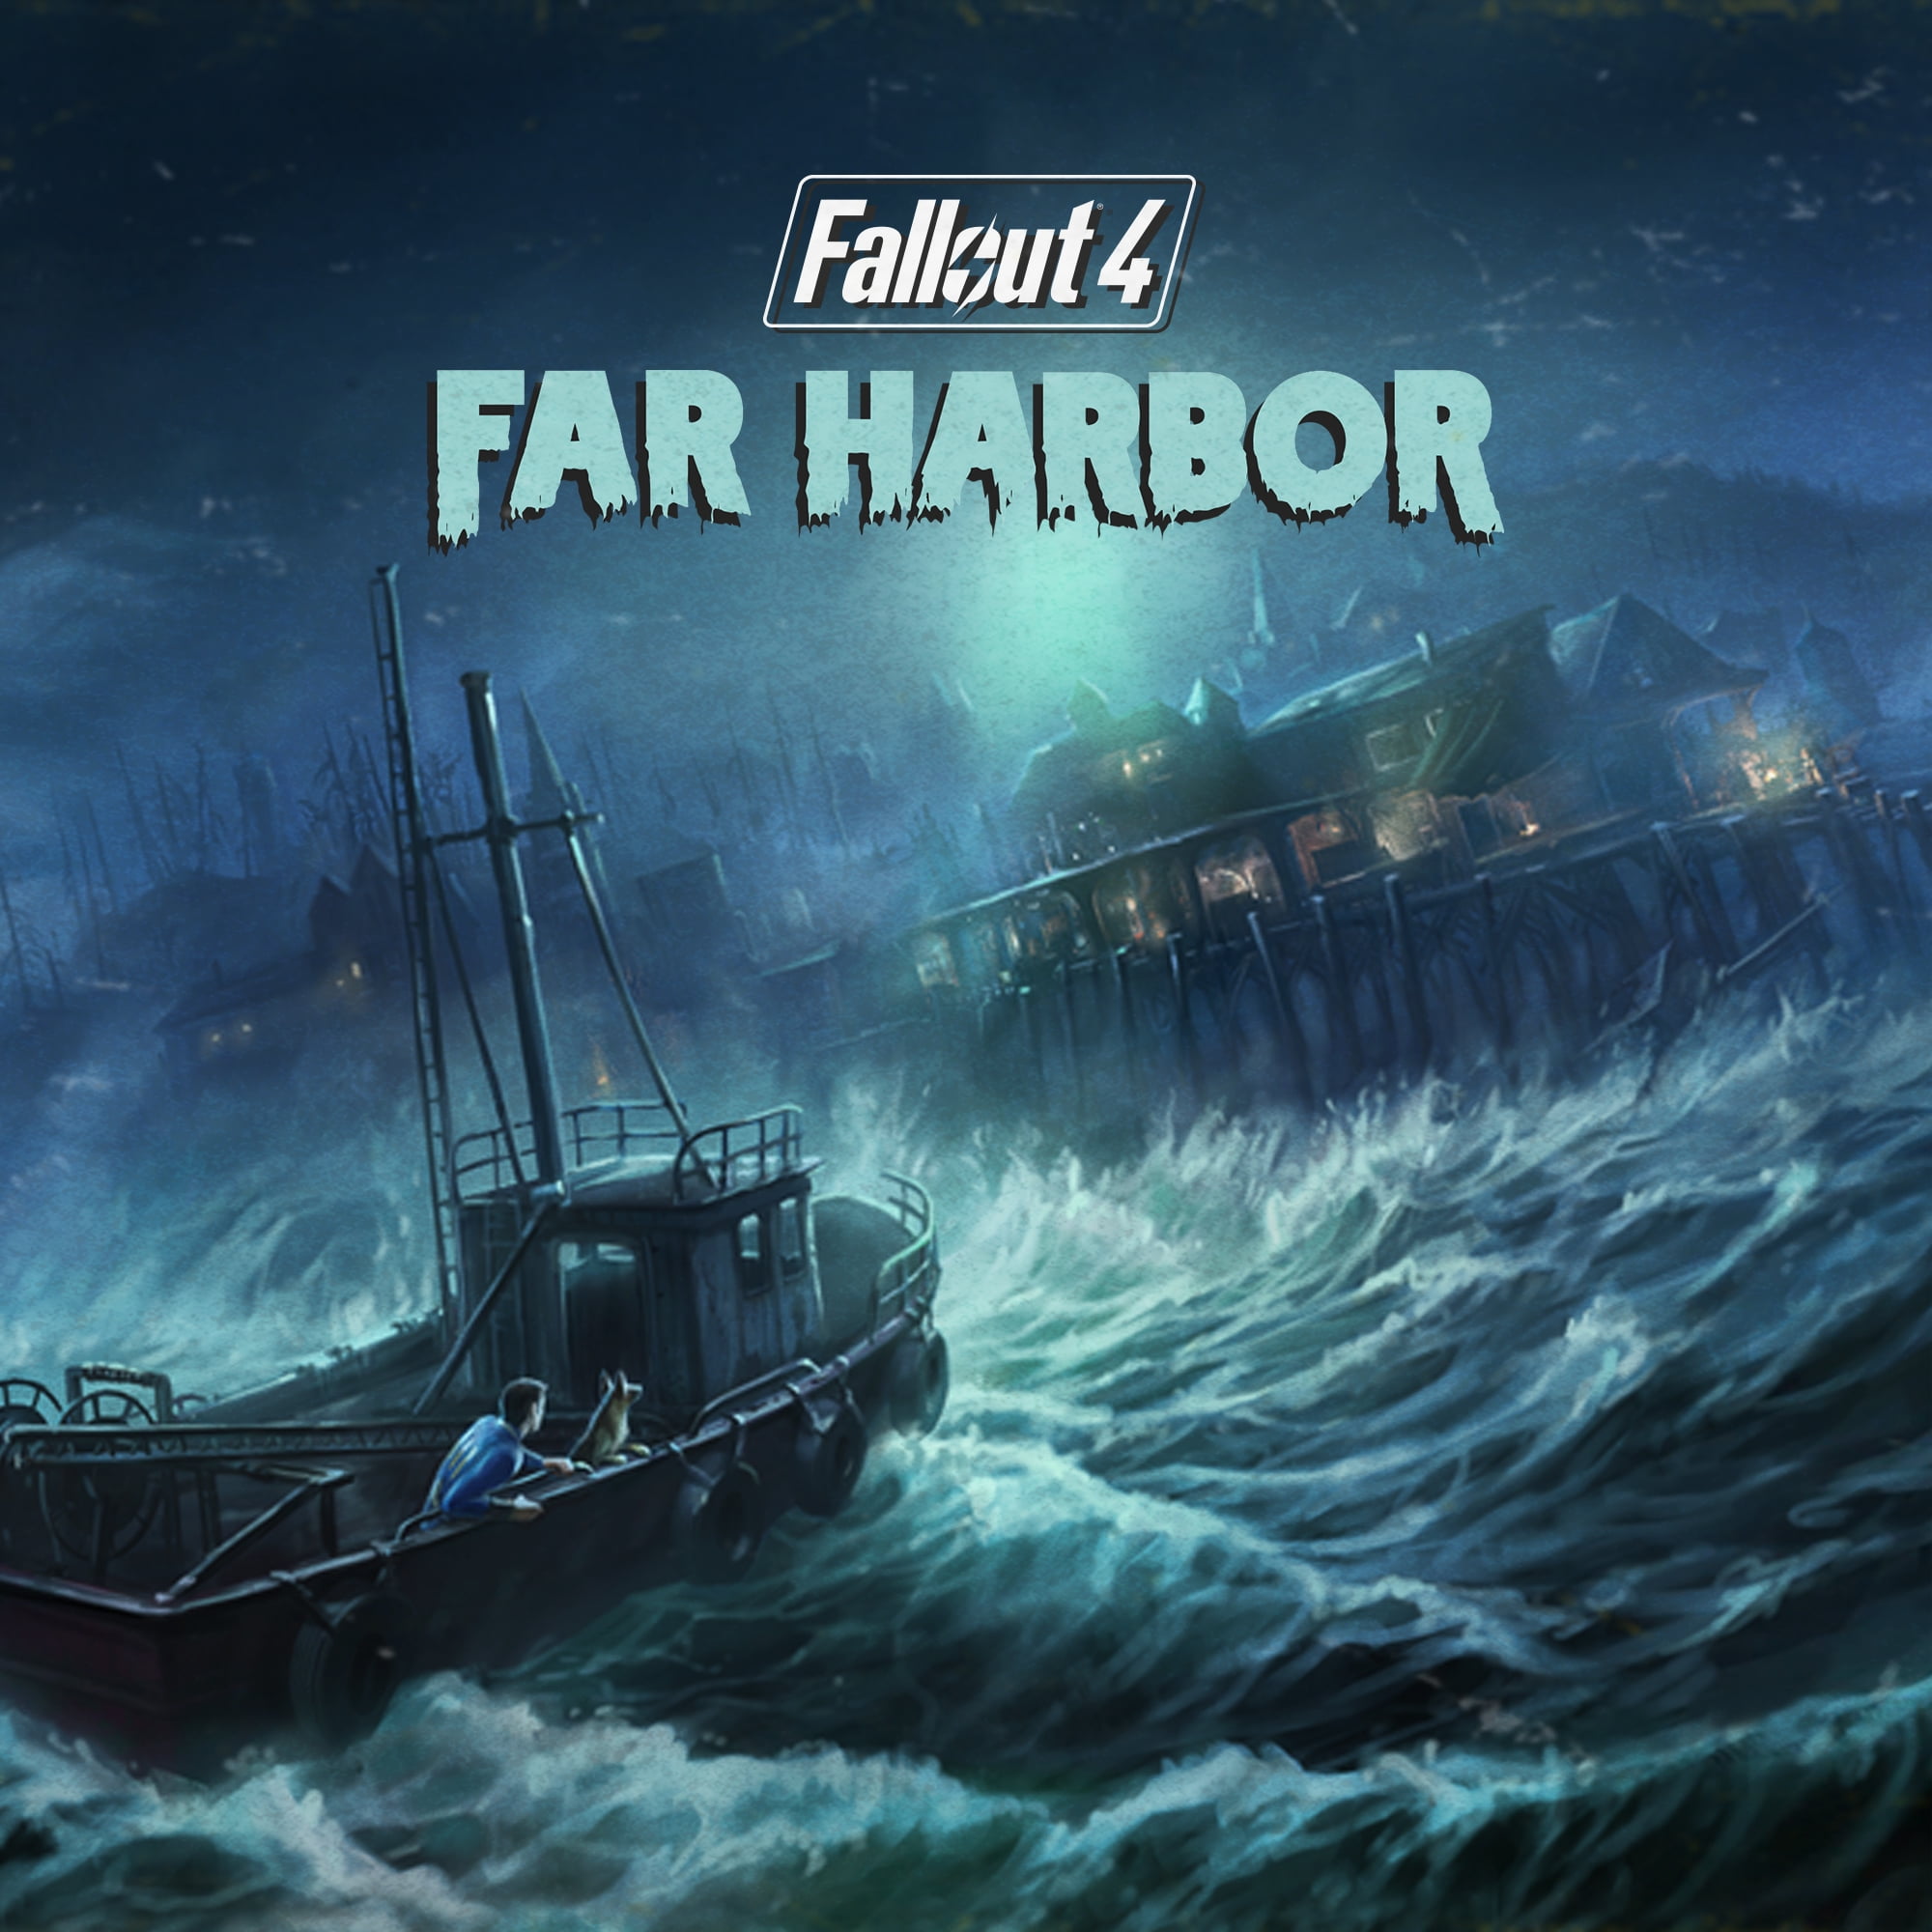 Fallout 4 far harbor достижения фото 73